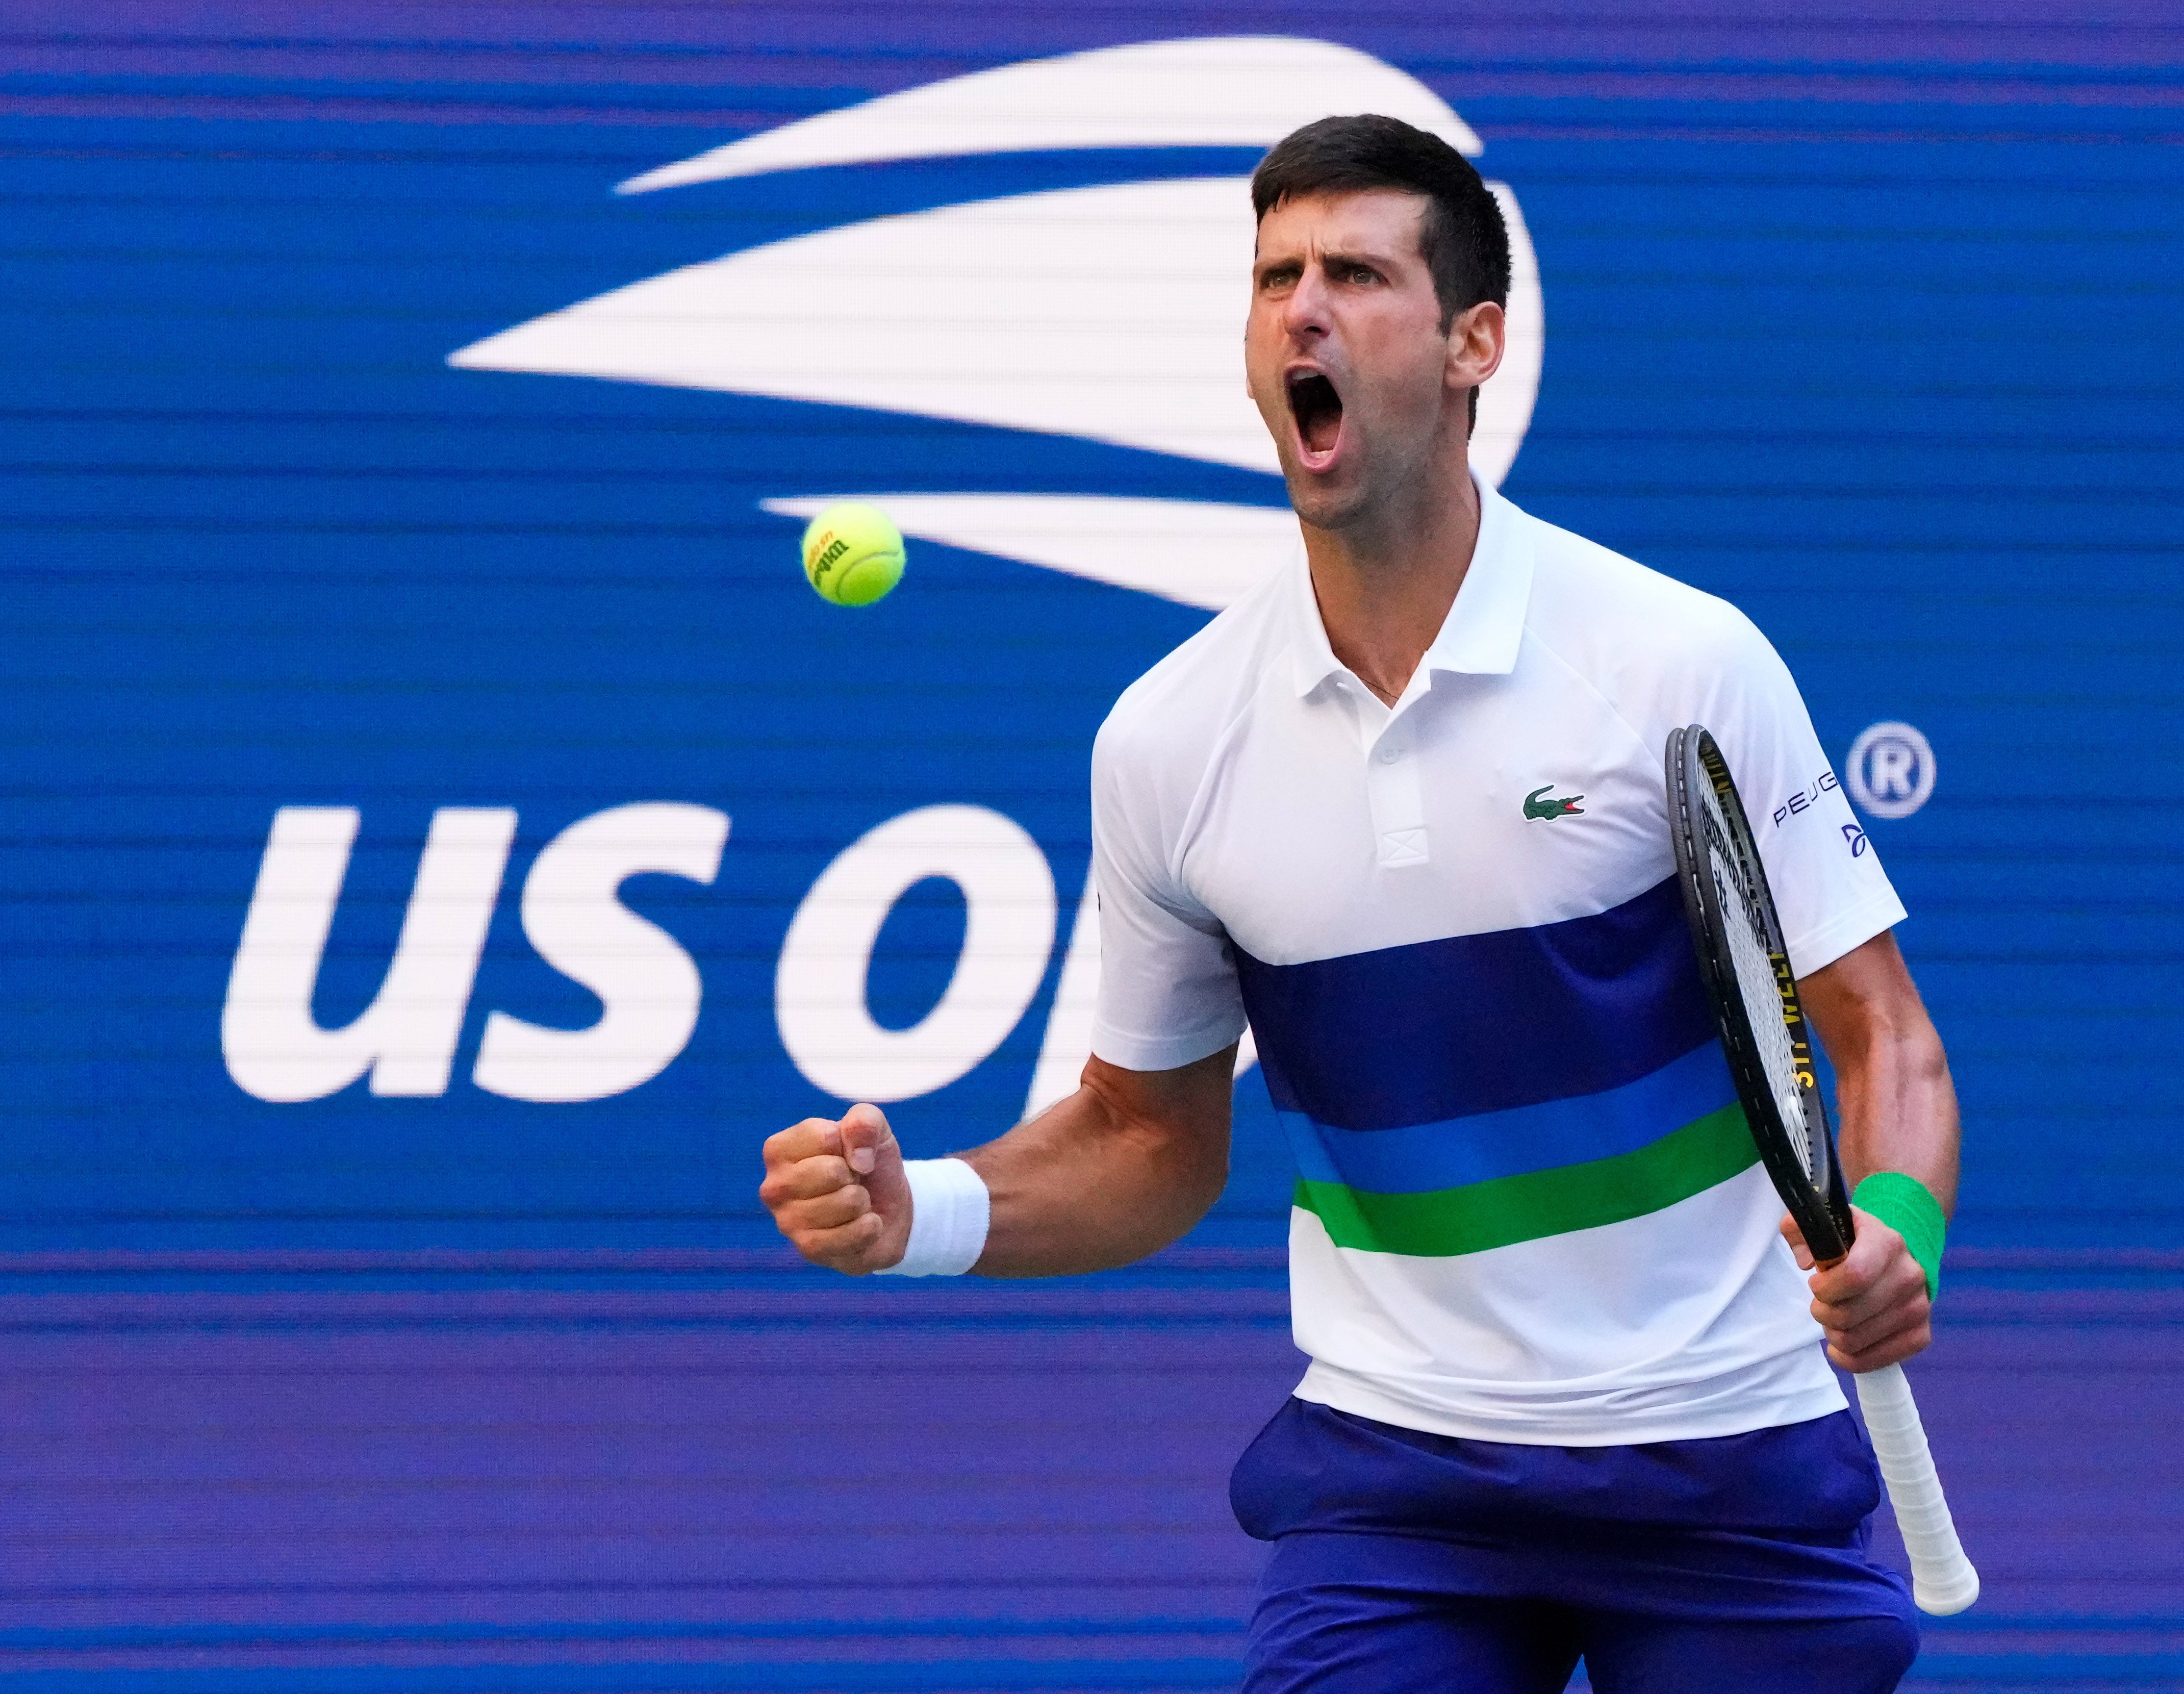 Djokovic dispatches old rival Nishikori to reach 4th round